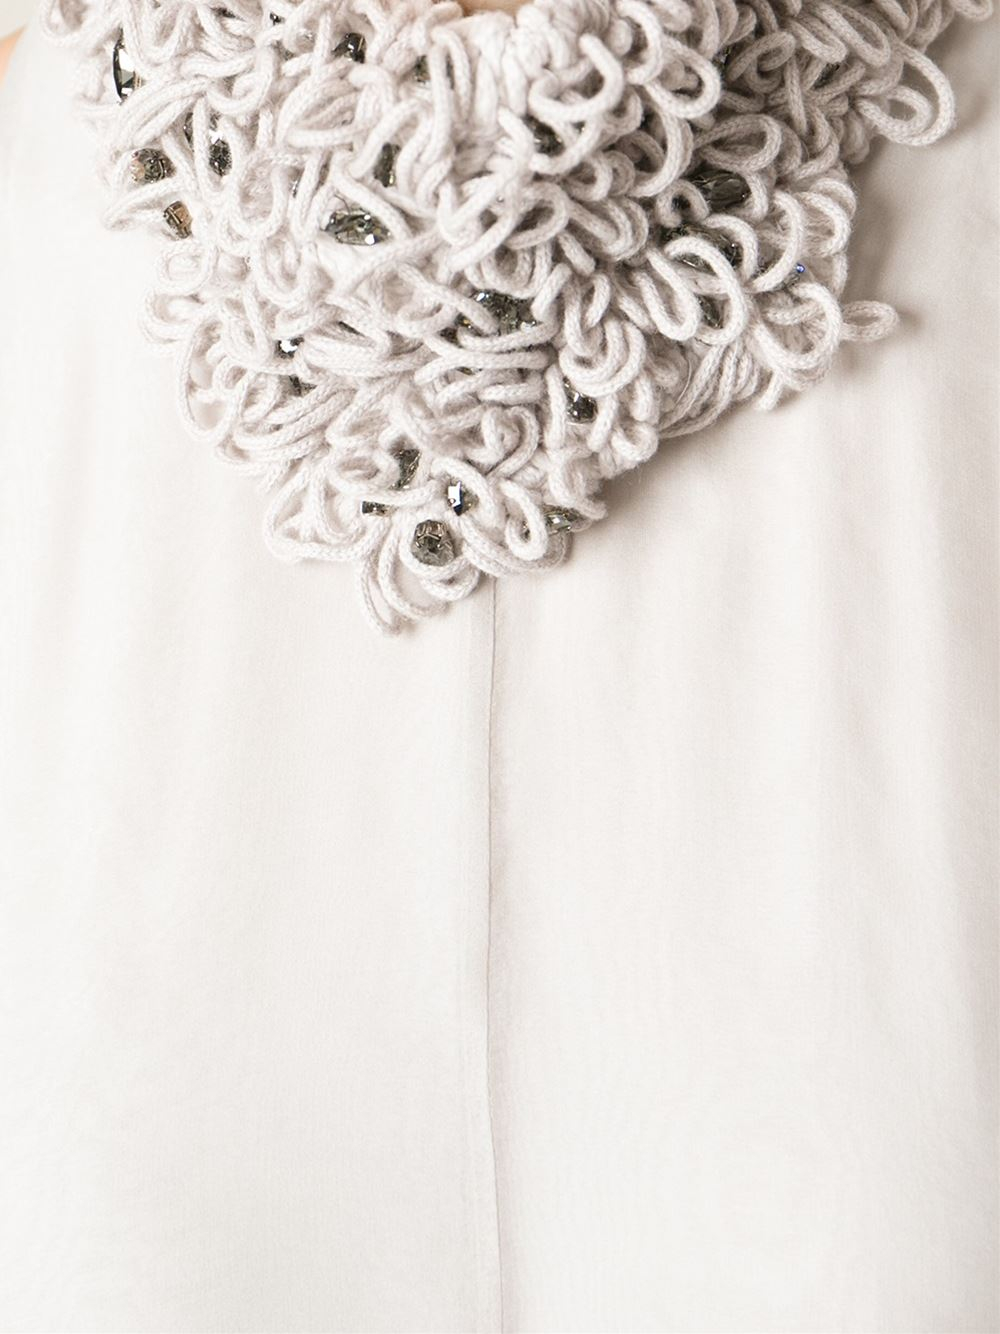 Brunello Cucinelli Embellished Neck Evening Dress in Gray | Lyst